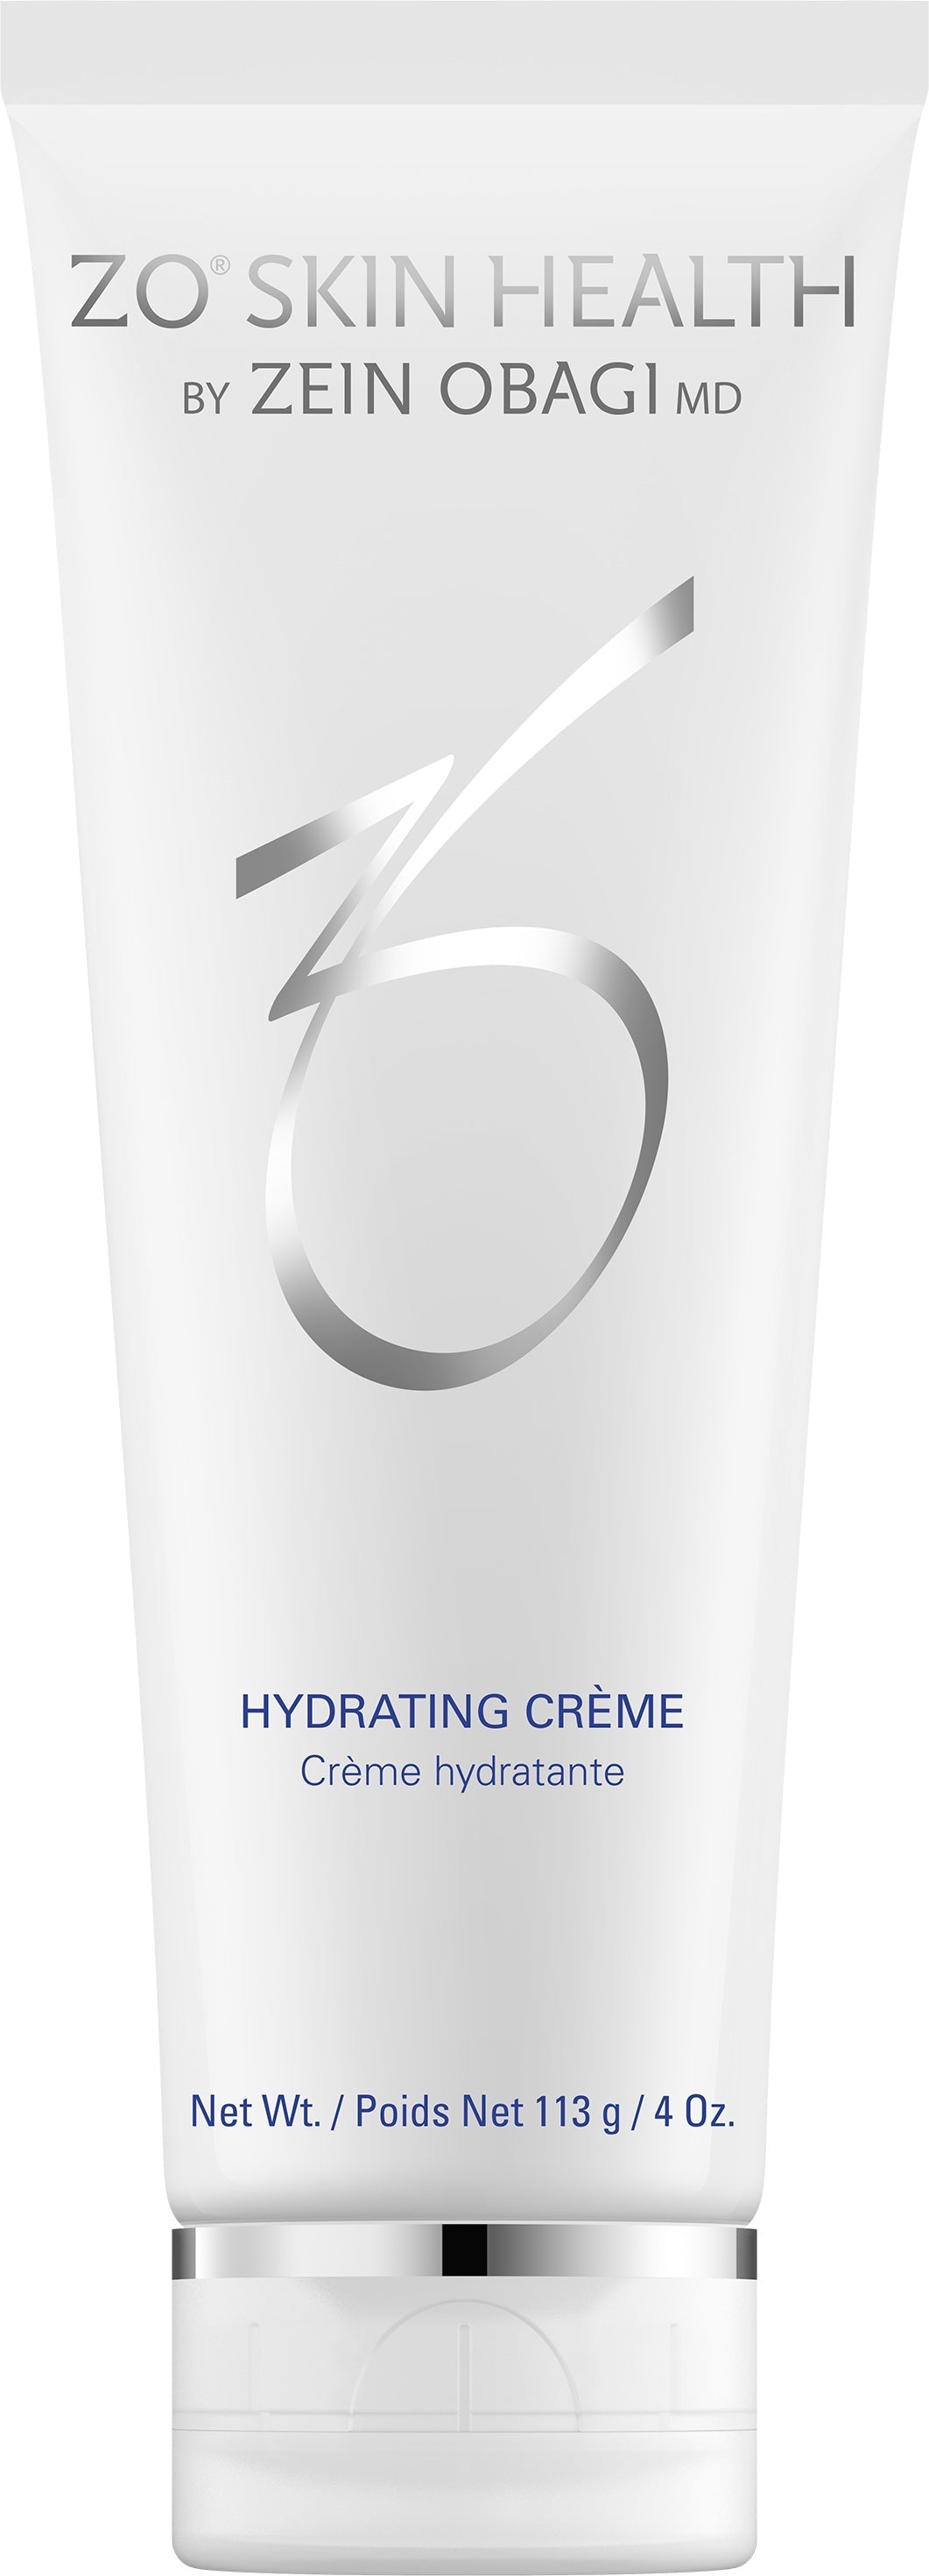 ZO Skin Health Hydrating Crème 113g